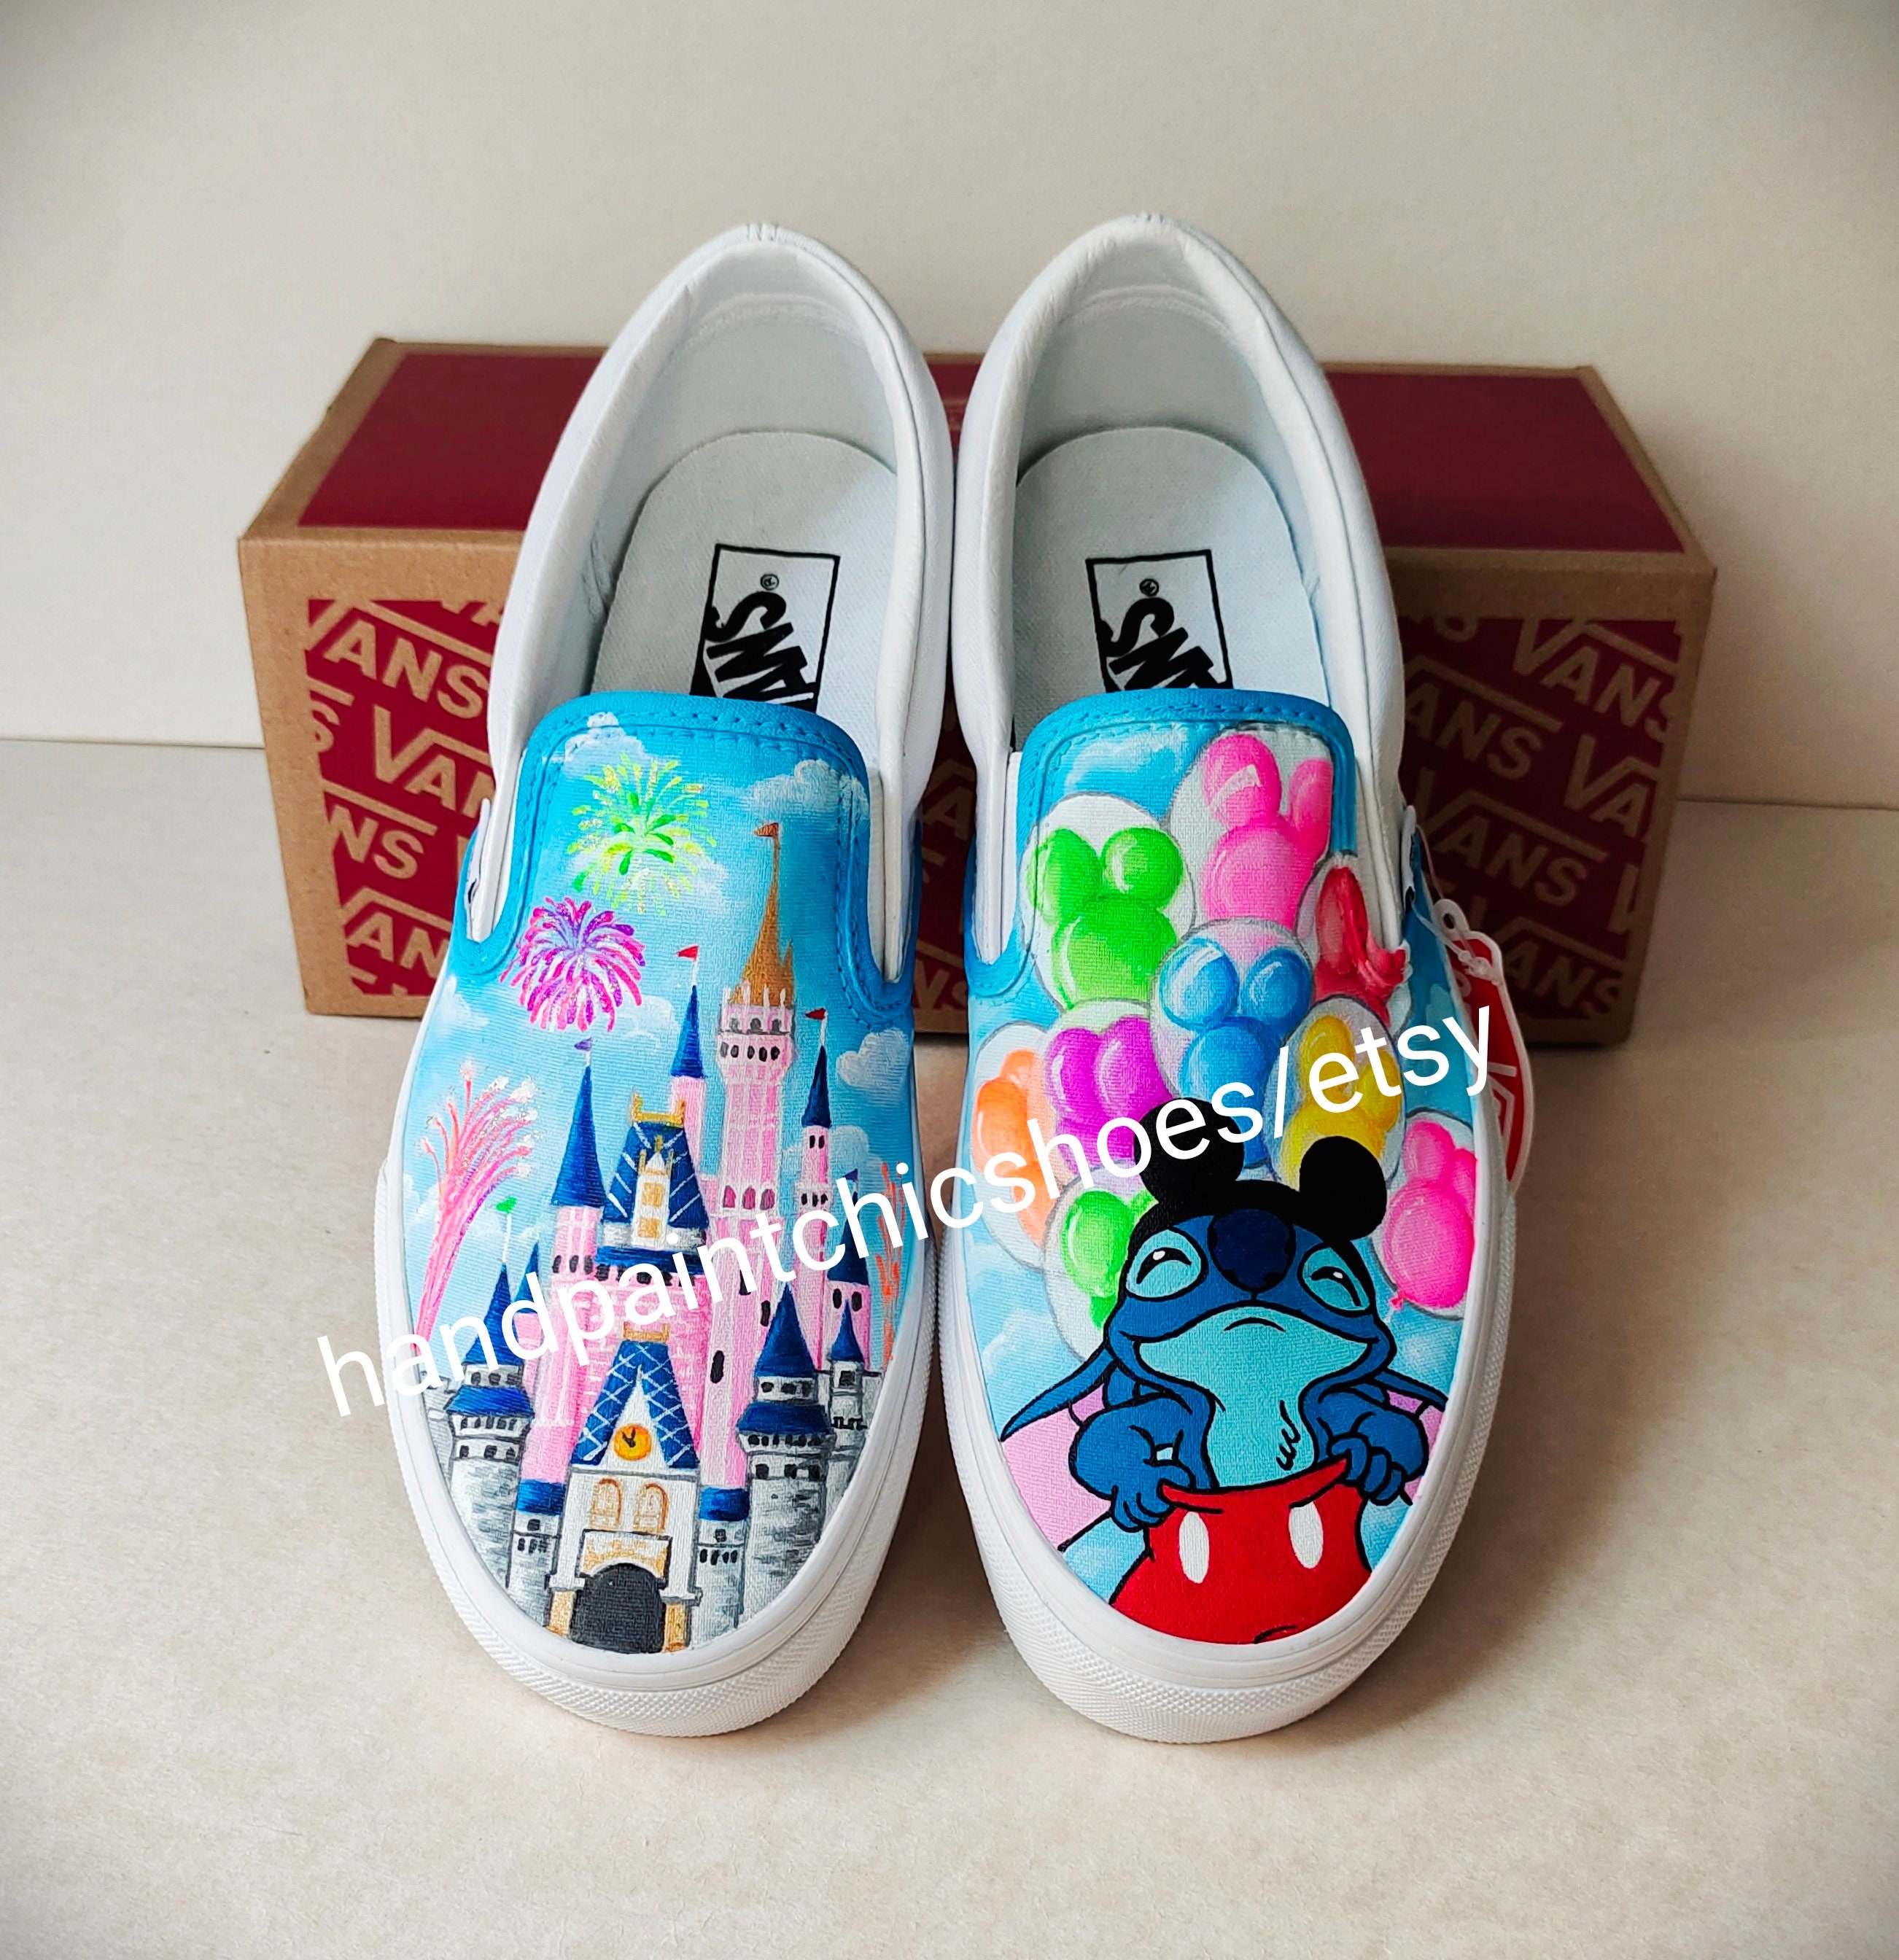 Lilo and Stitch - Disney - Custom Painted Vans - Vans Slip-On